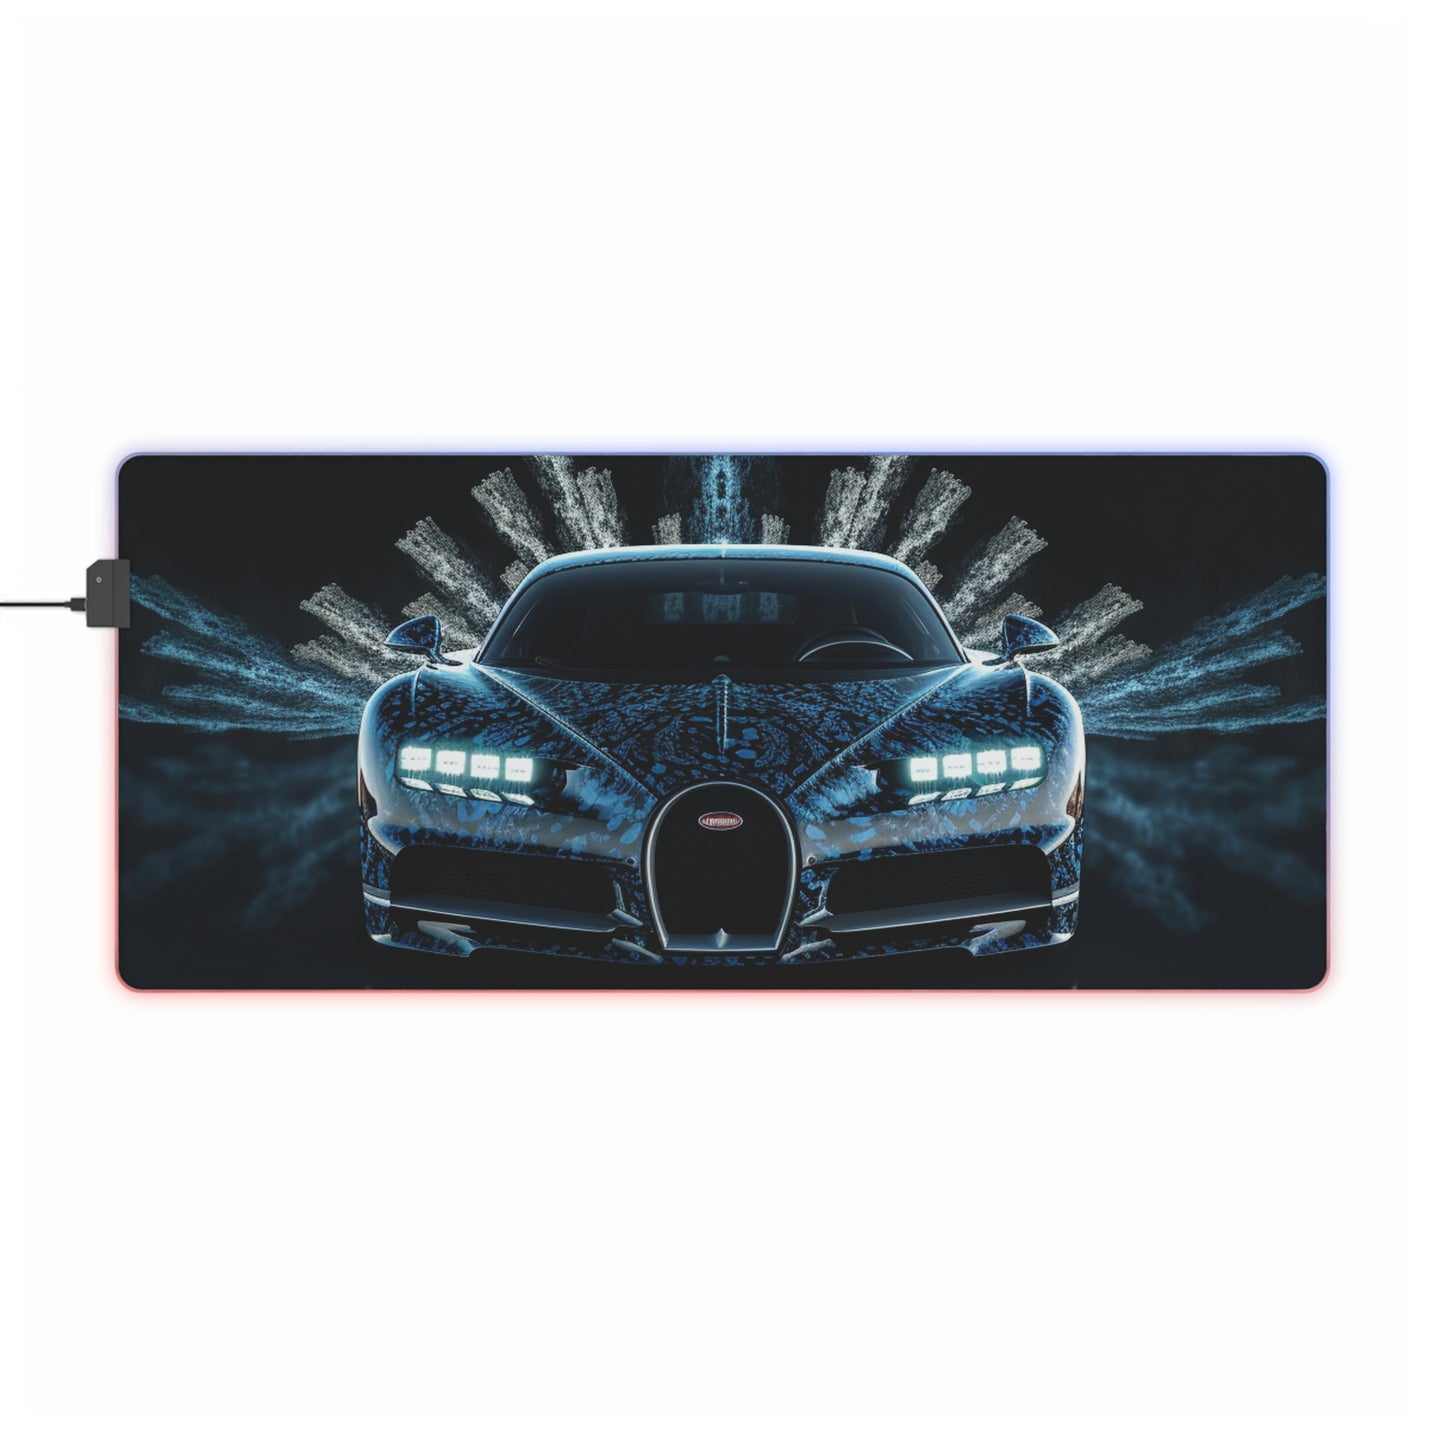 LED Gaming Mouse Pad Hyper Bugatti 2